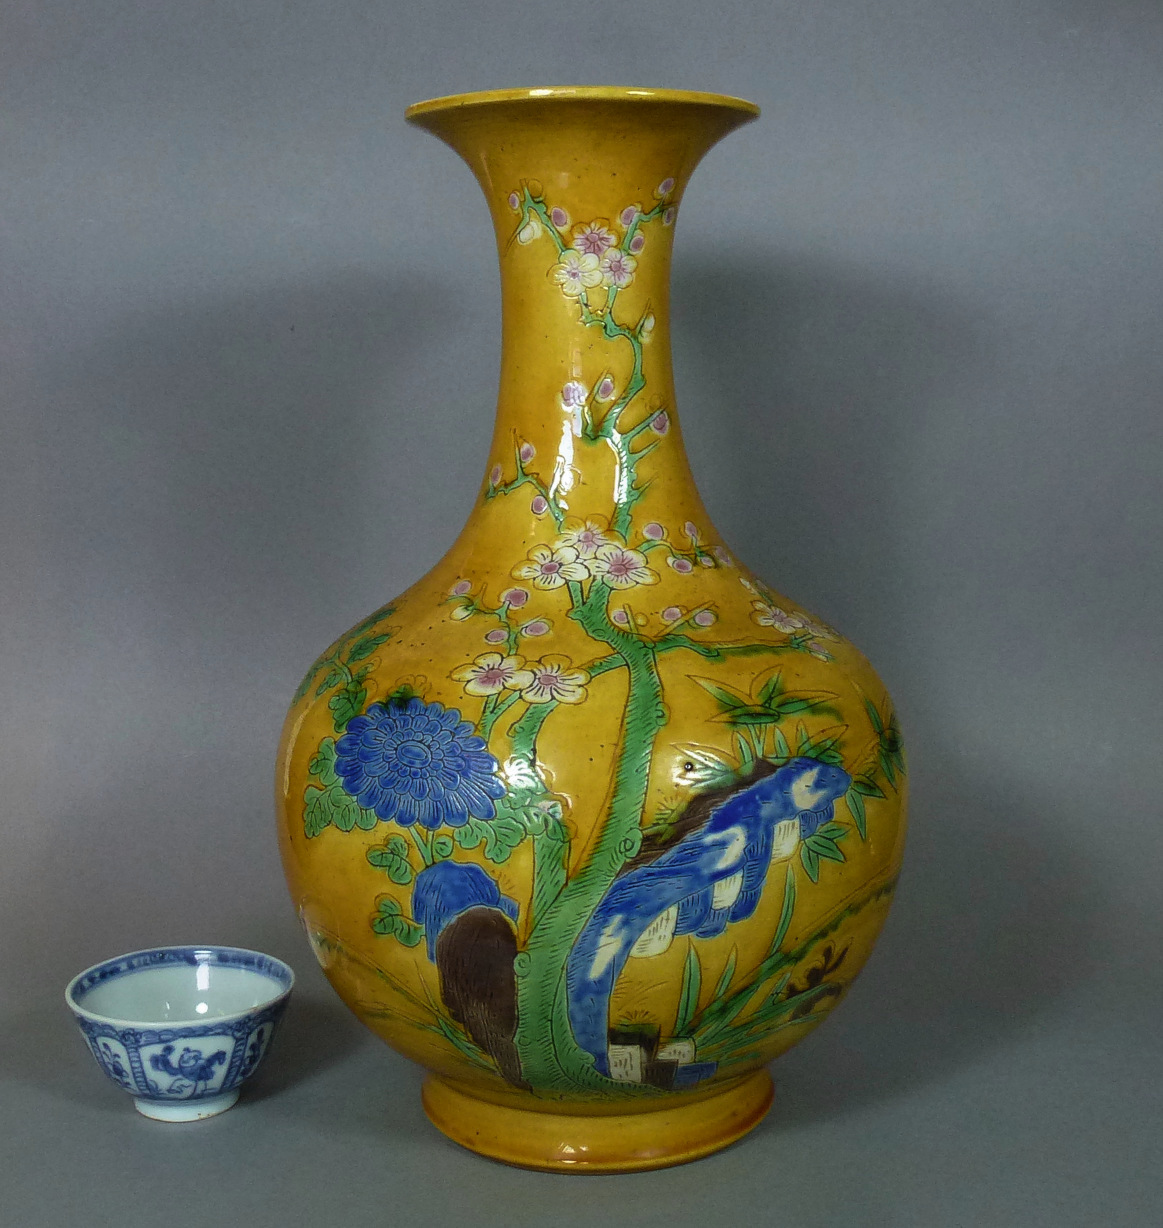 19th C. Chinese Sancai Vase - "Four Gentlemen"